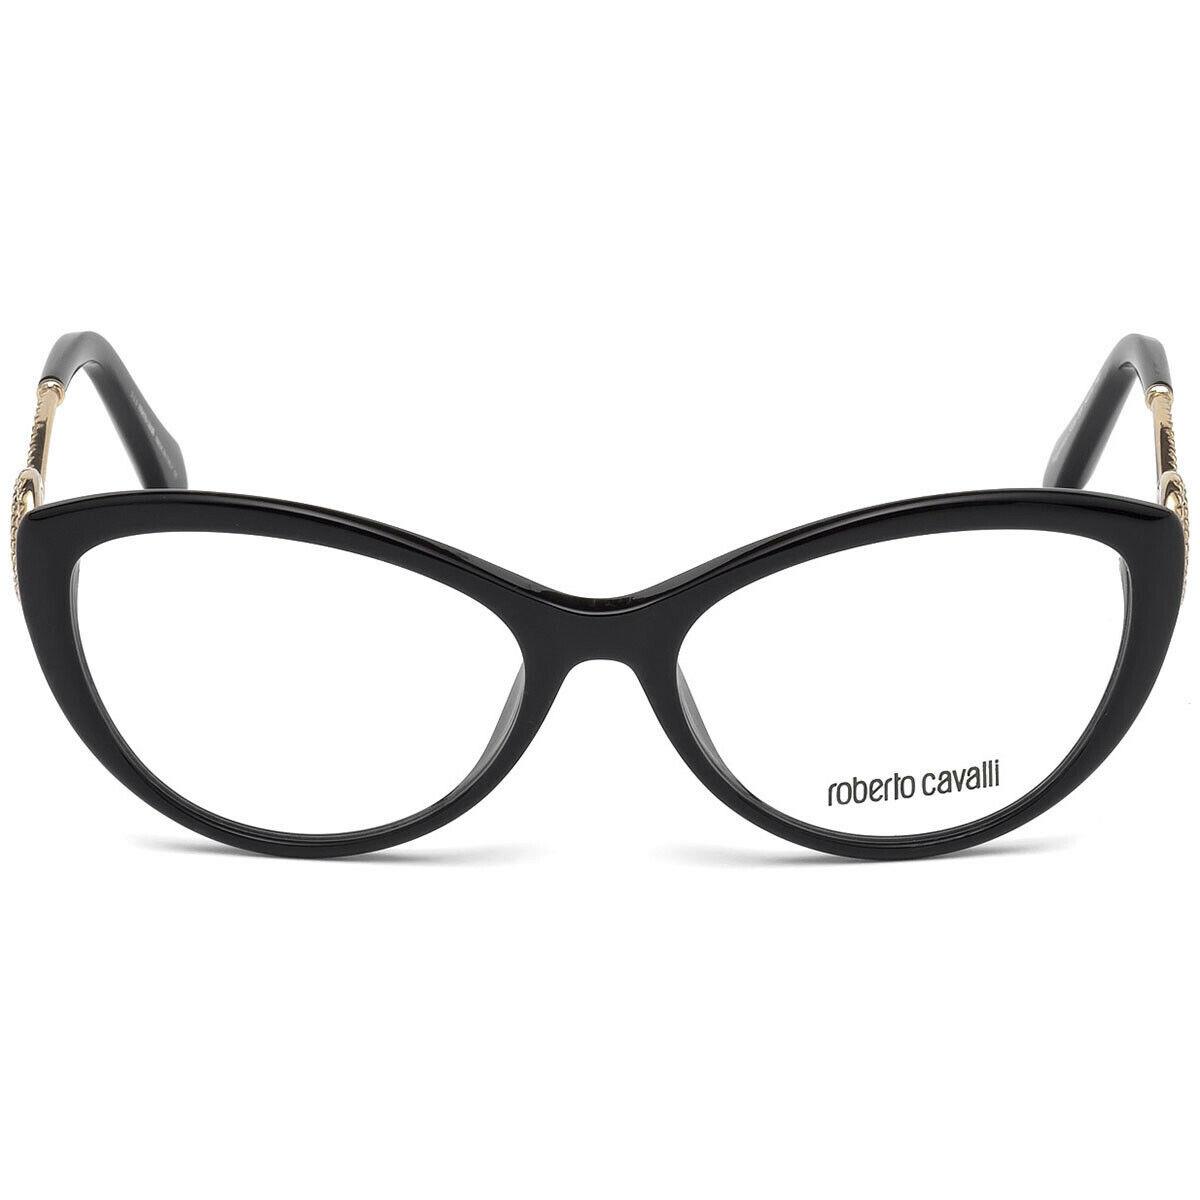 Roberto Cavalli Argentario RC 5009 Black 001 Eyeglasses Frame 54-16-140 Cat Eye - Black 001, Frame: Black 001, Lens: Clear